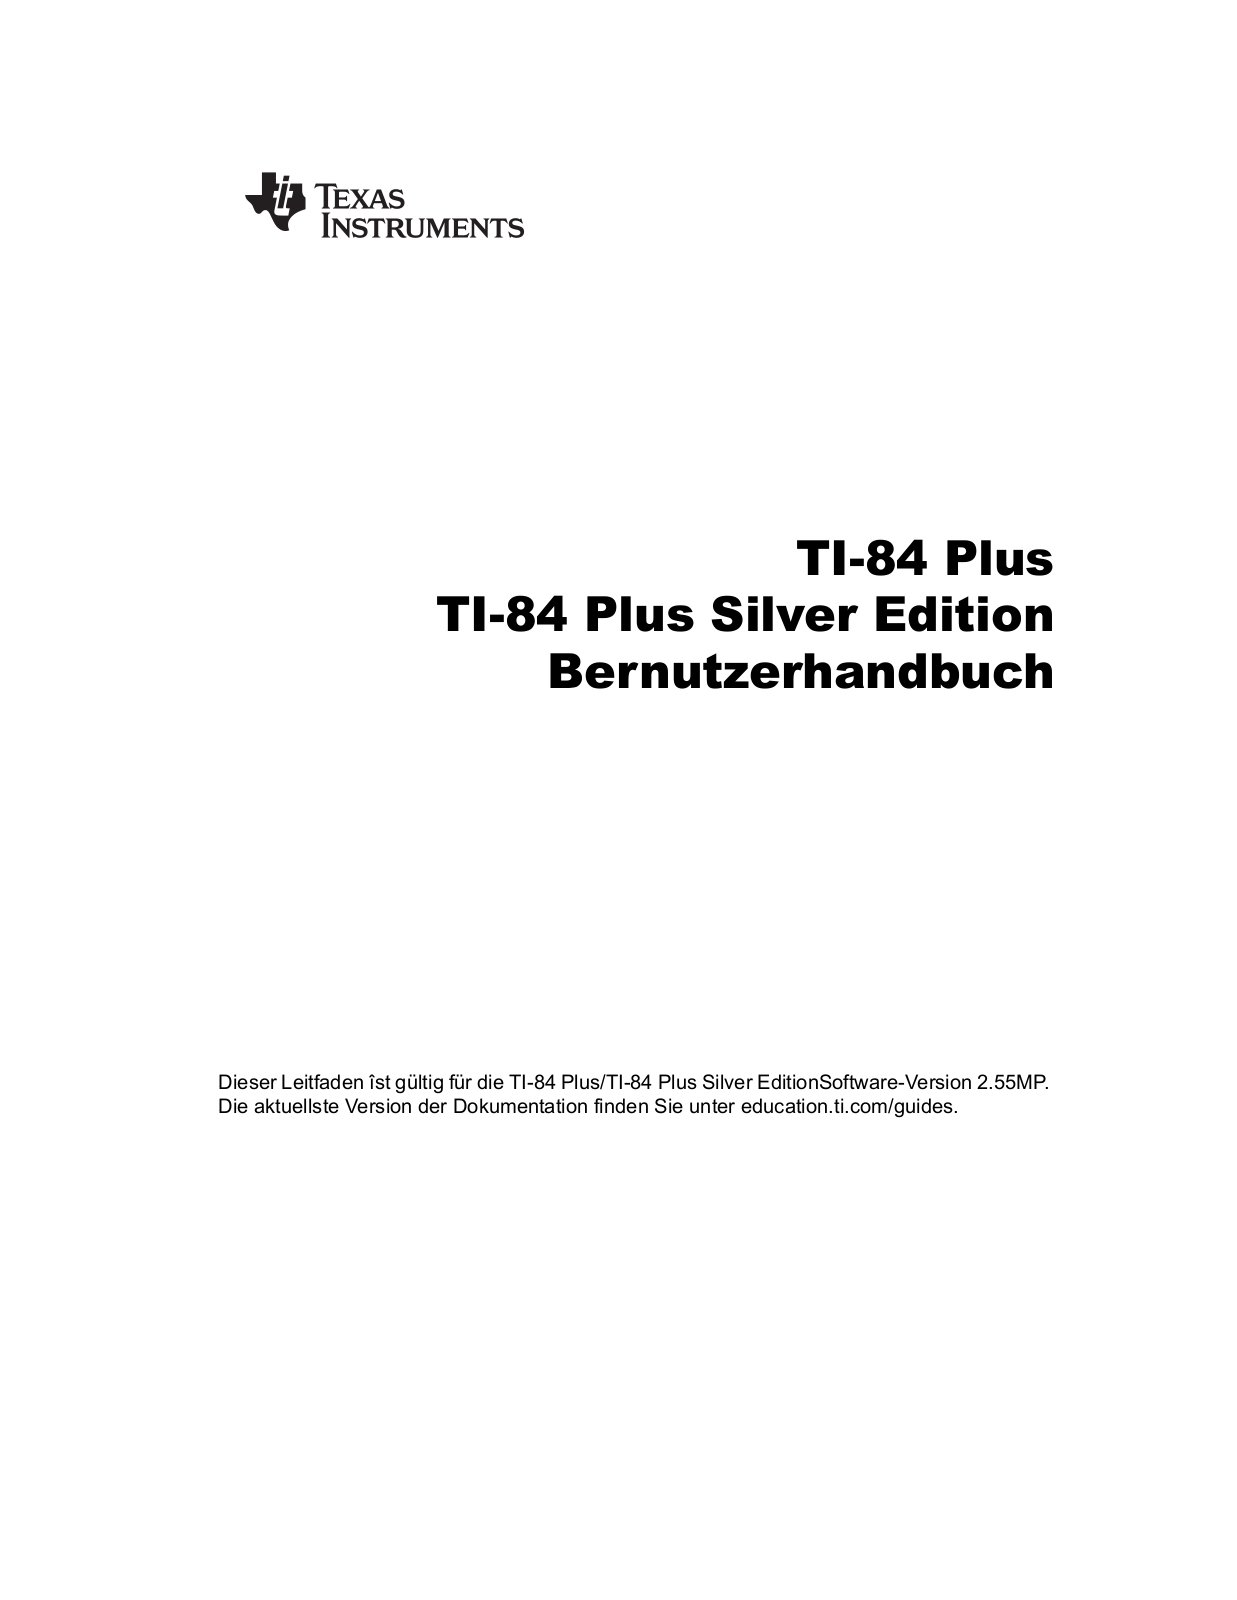 Texas instruments TI-84 PLUS, TI-84 PLUS SILVER EDITION User Manual